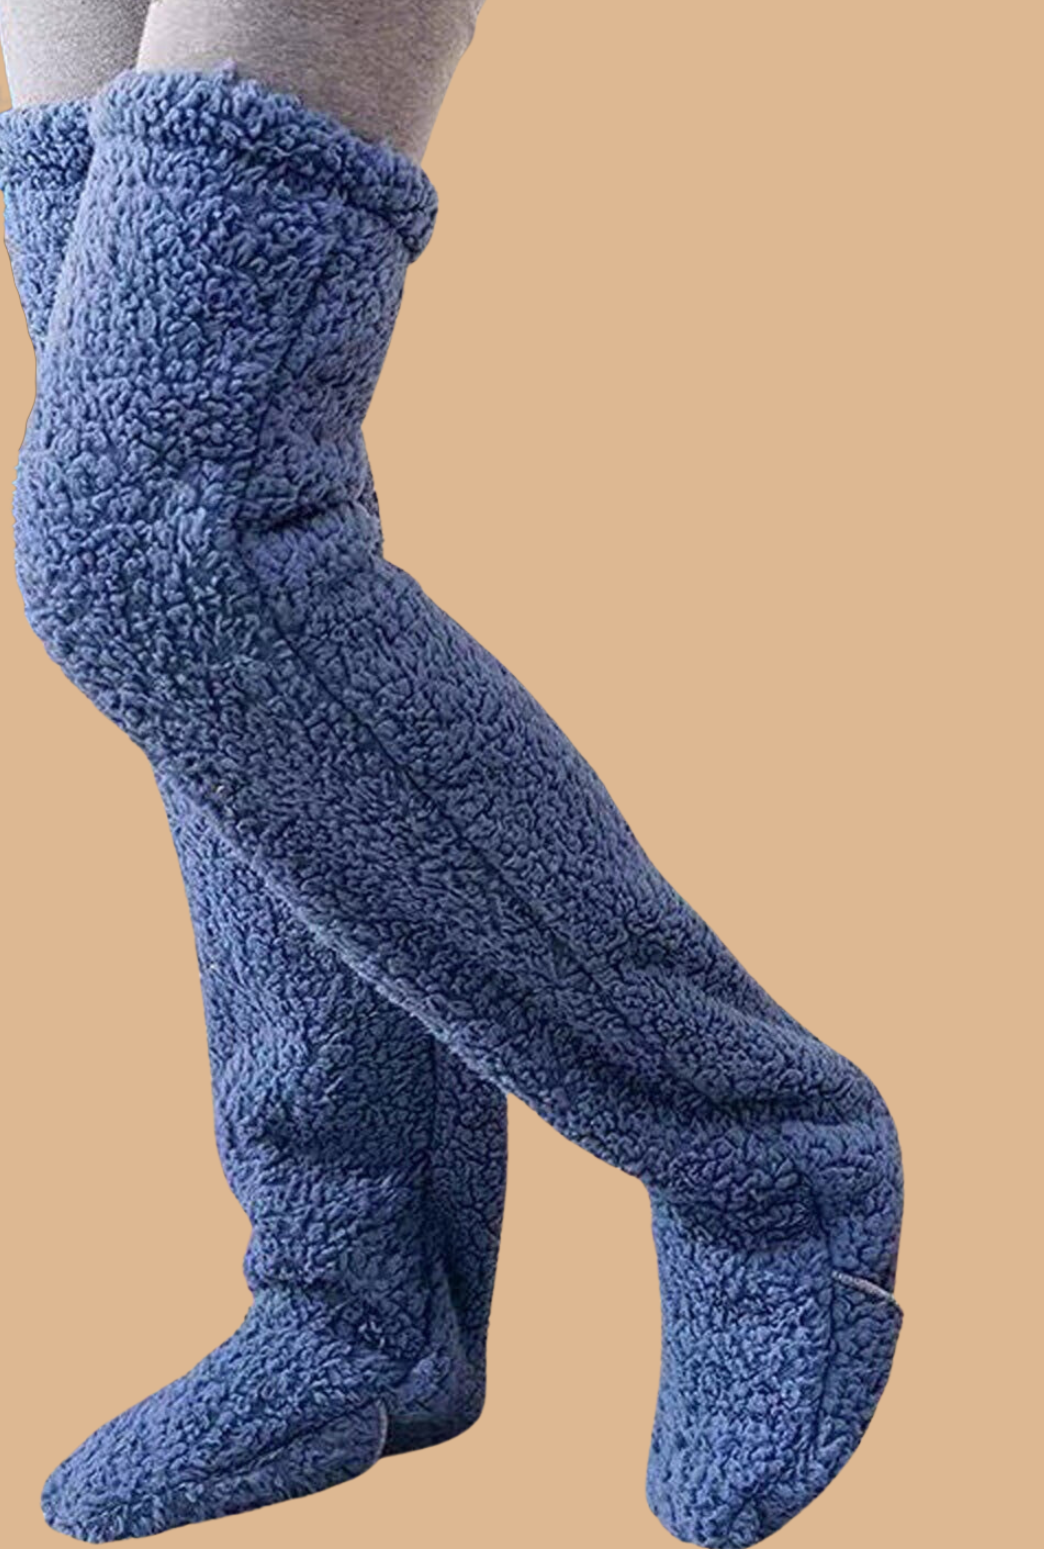 MySnuggs Cozy Socks + Free Cozy Gloves